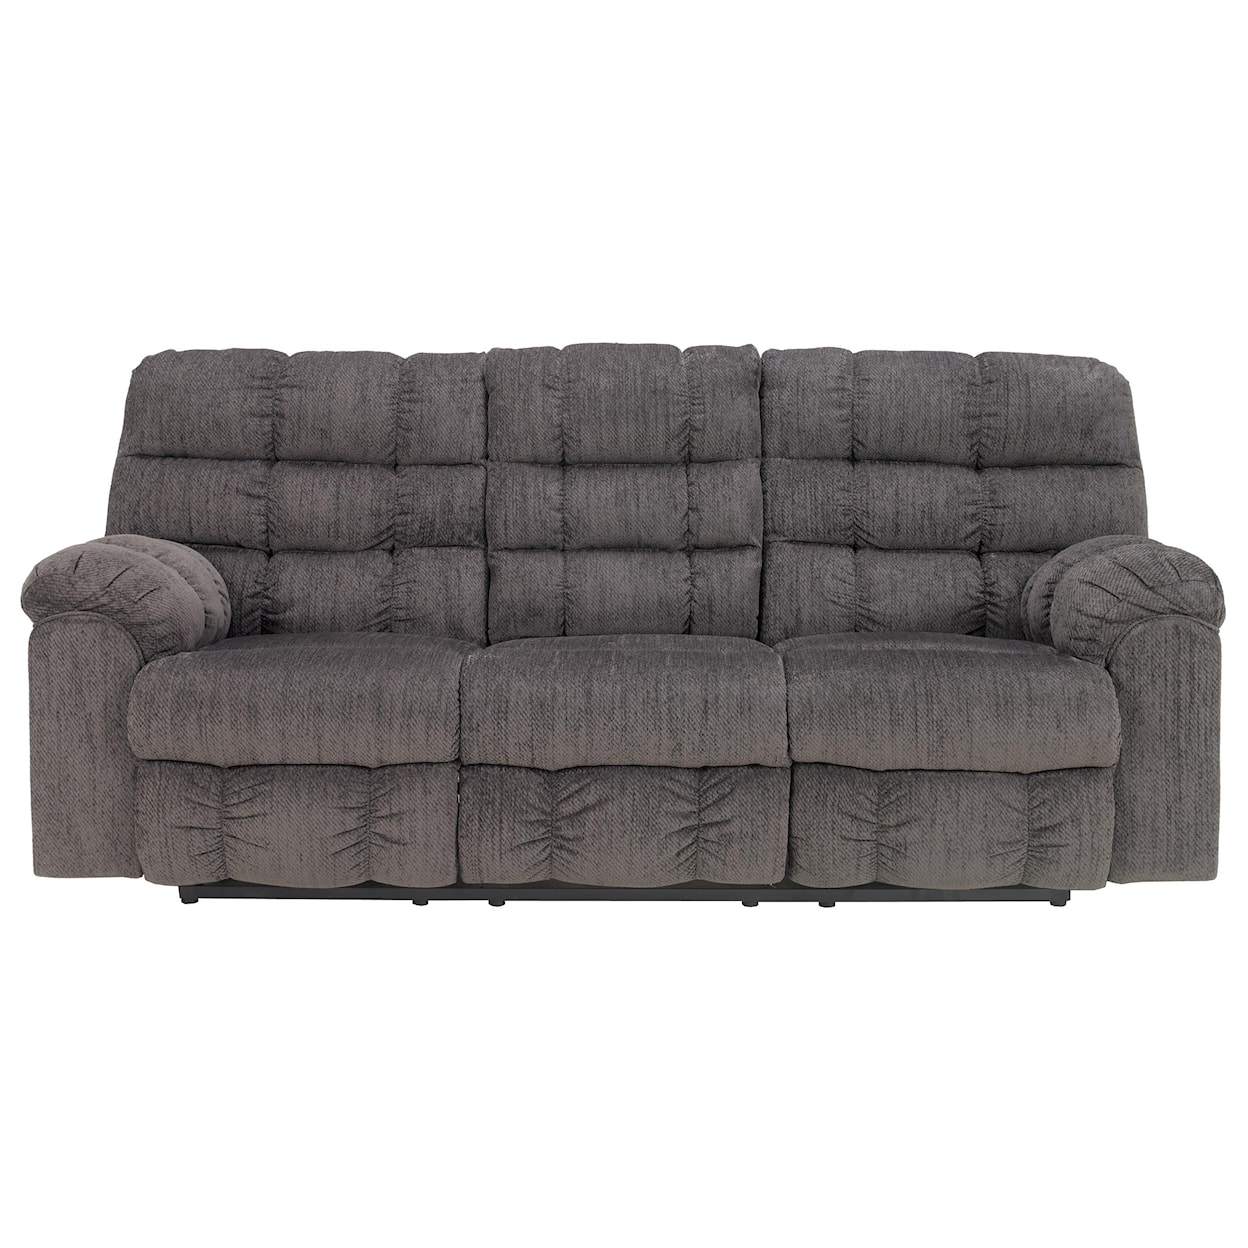 Benchcraft Acieona - Slate Reclining Sofa with Drop Down Table